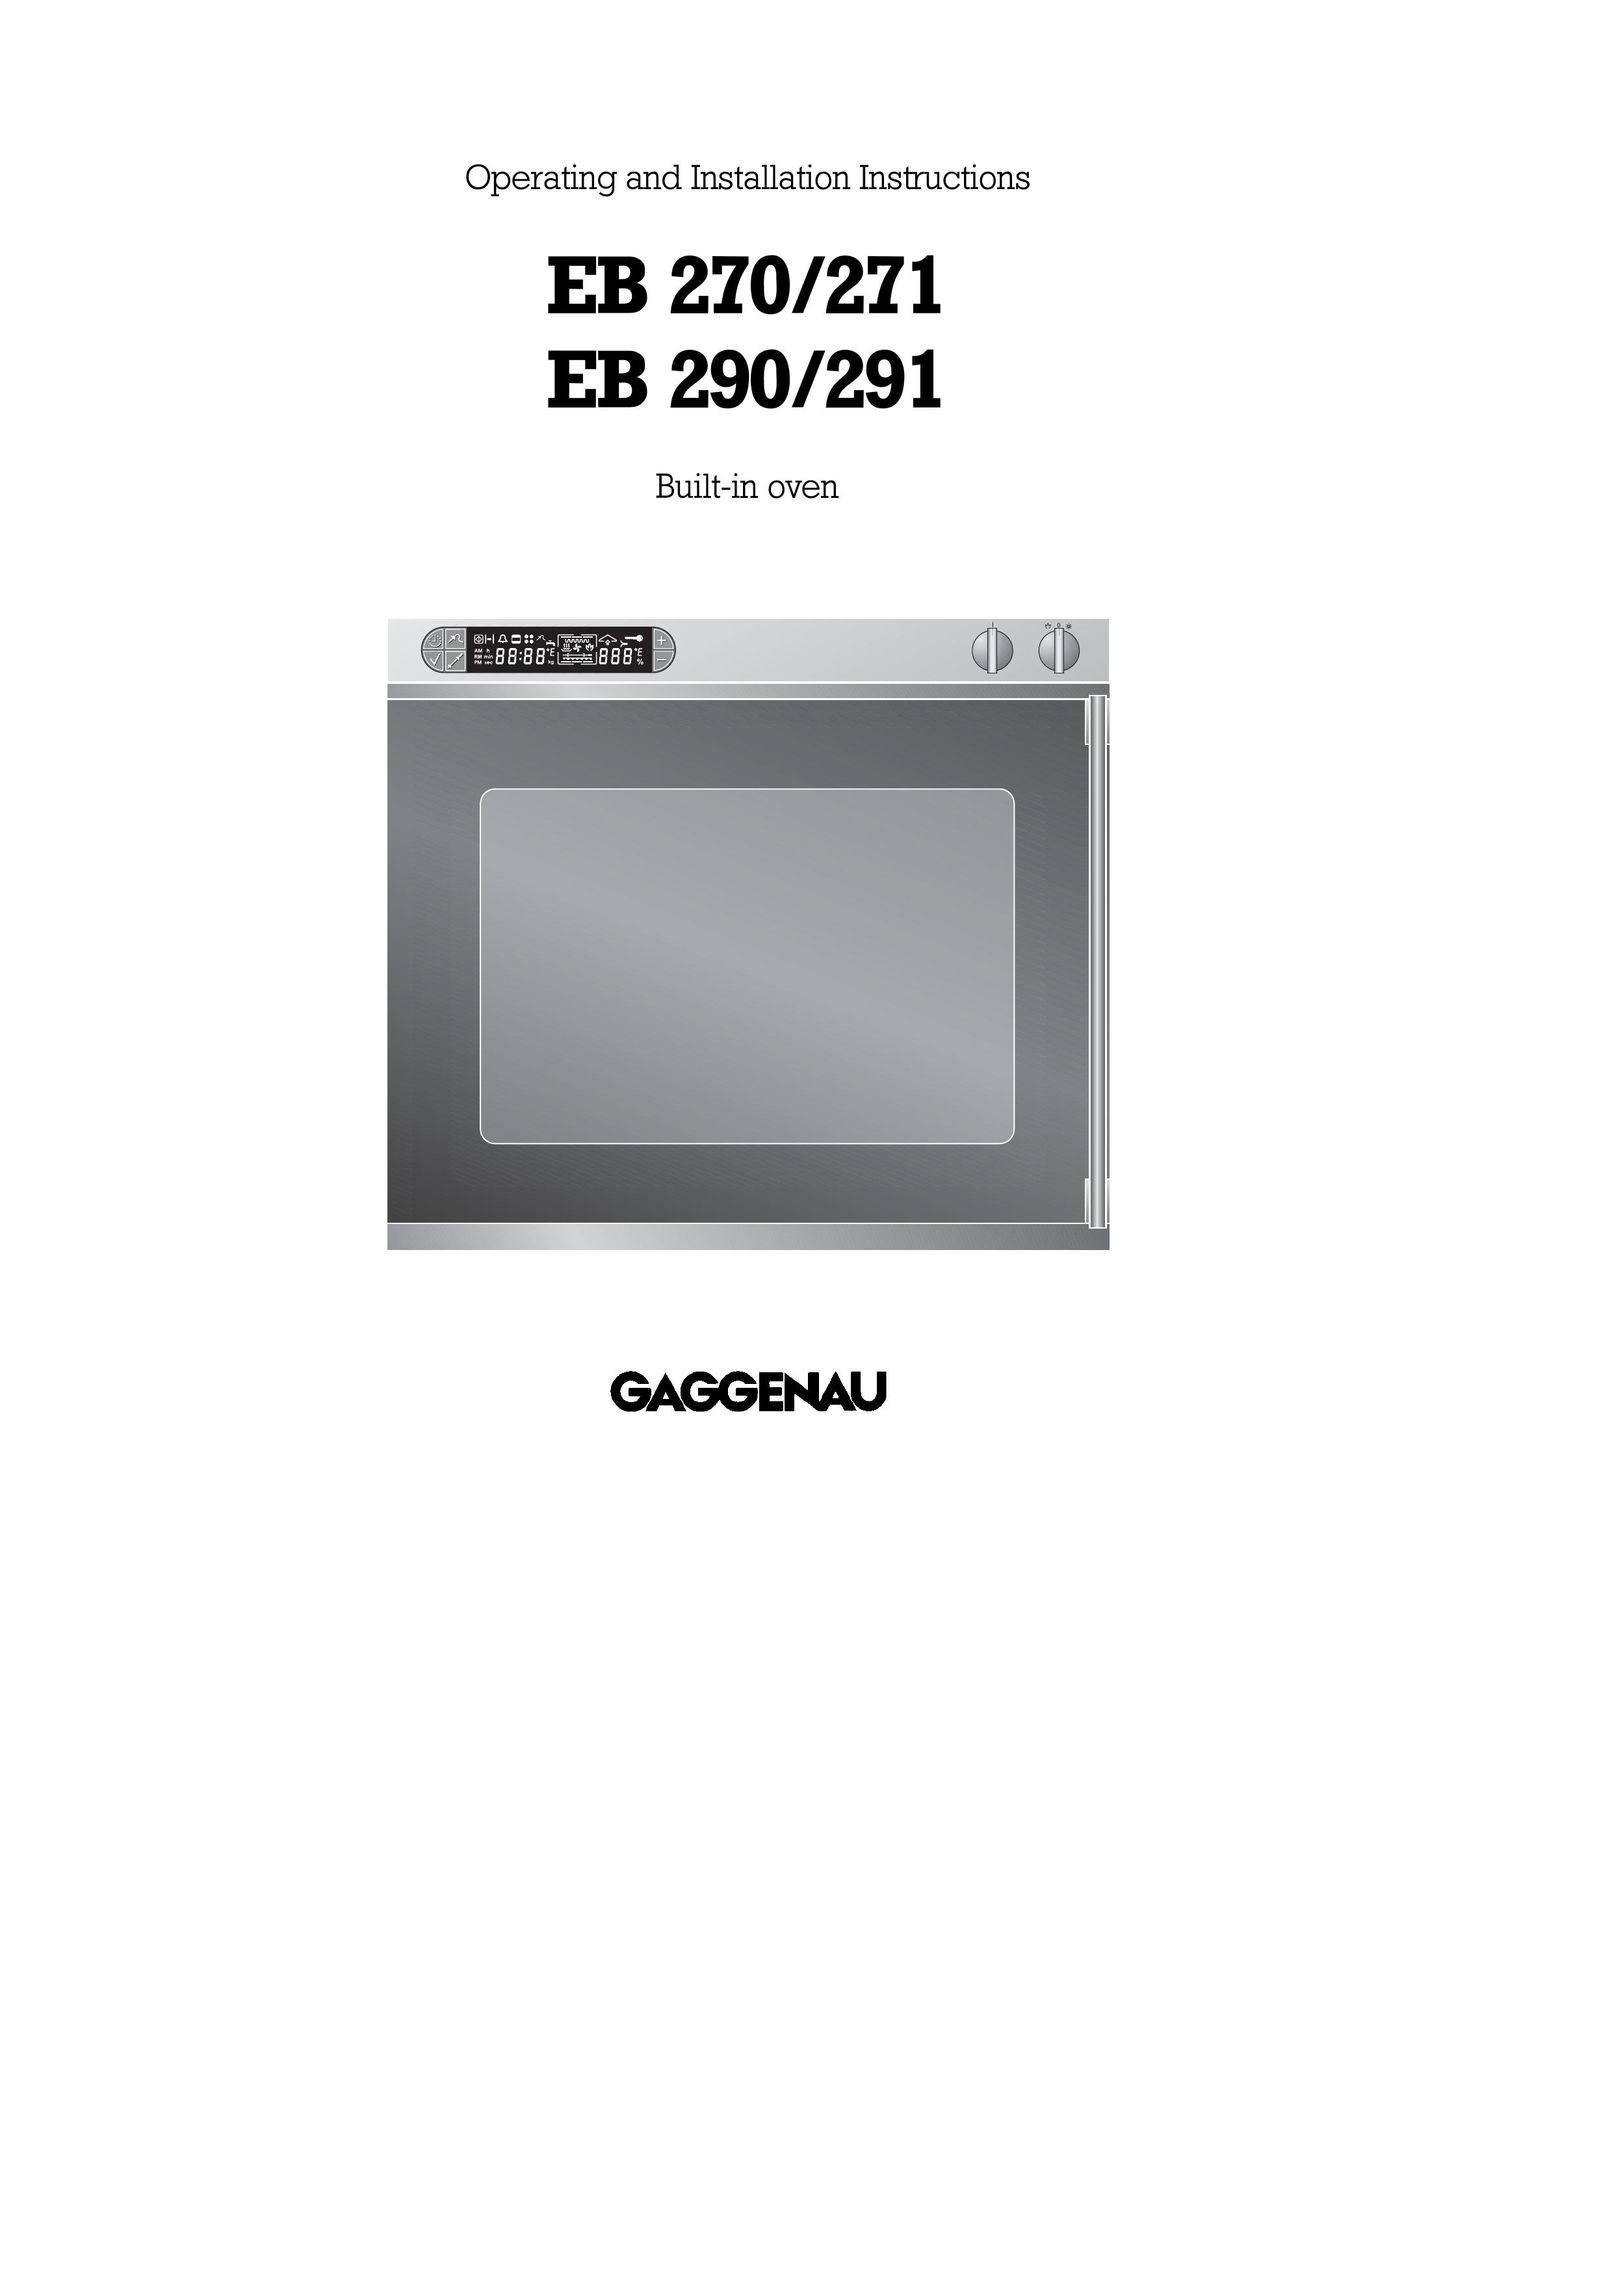 Gaggenau EB 290/291 Microwave Oven User Manual